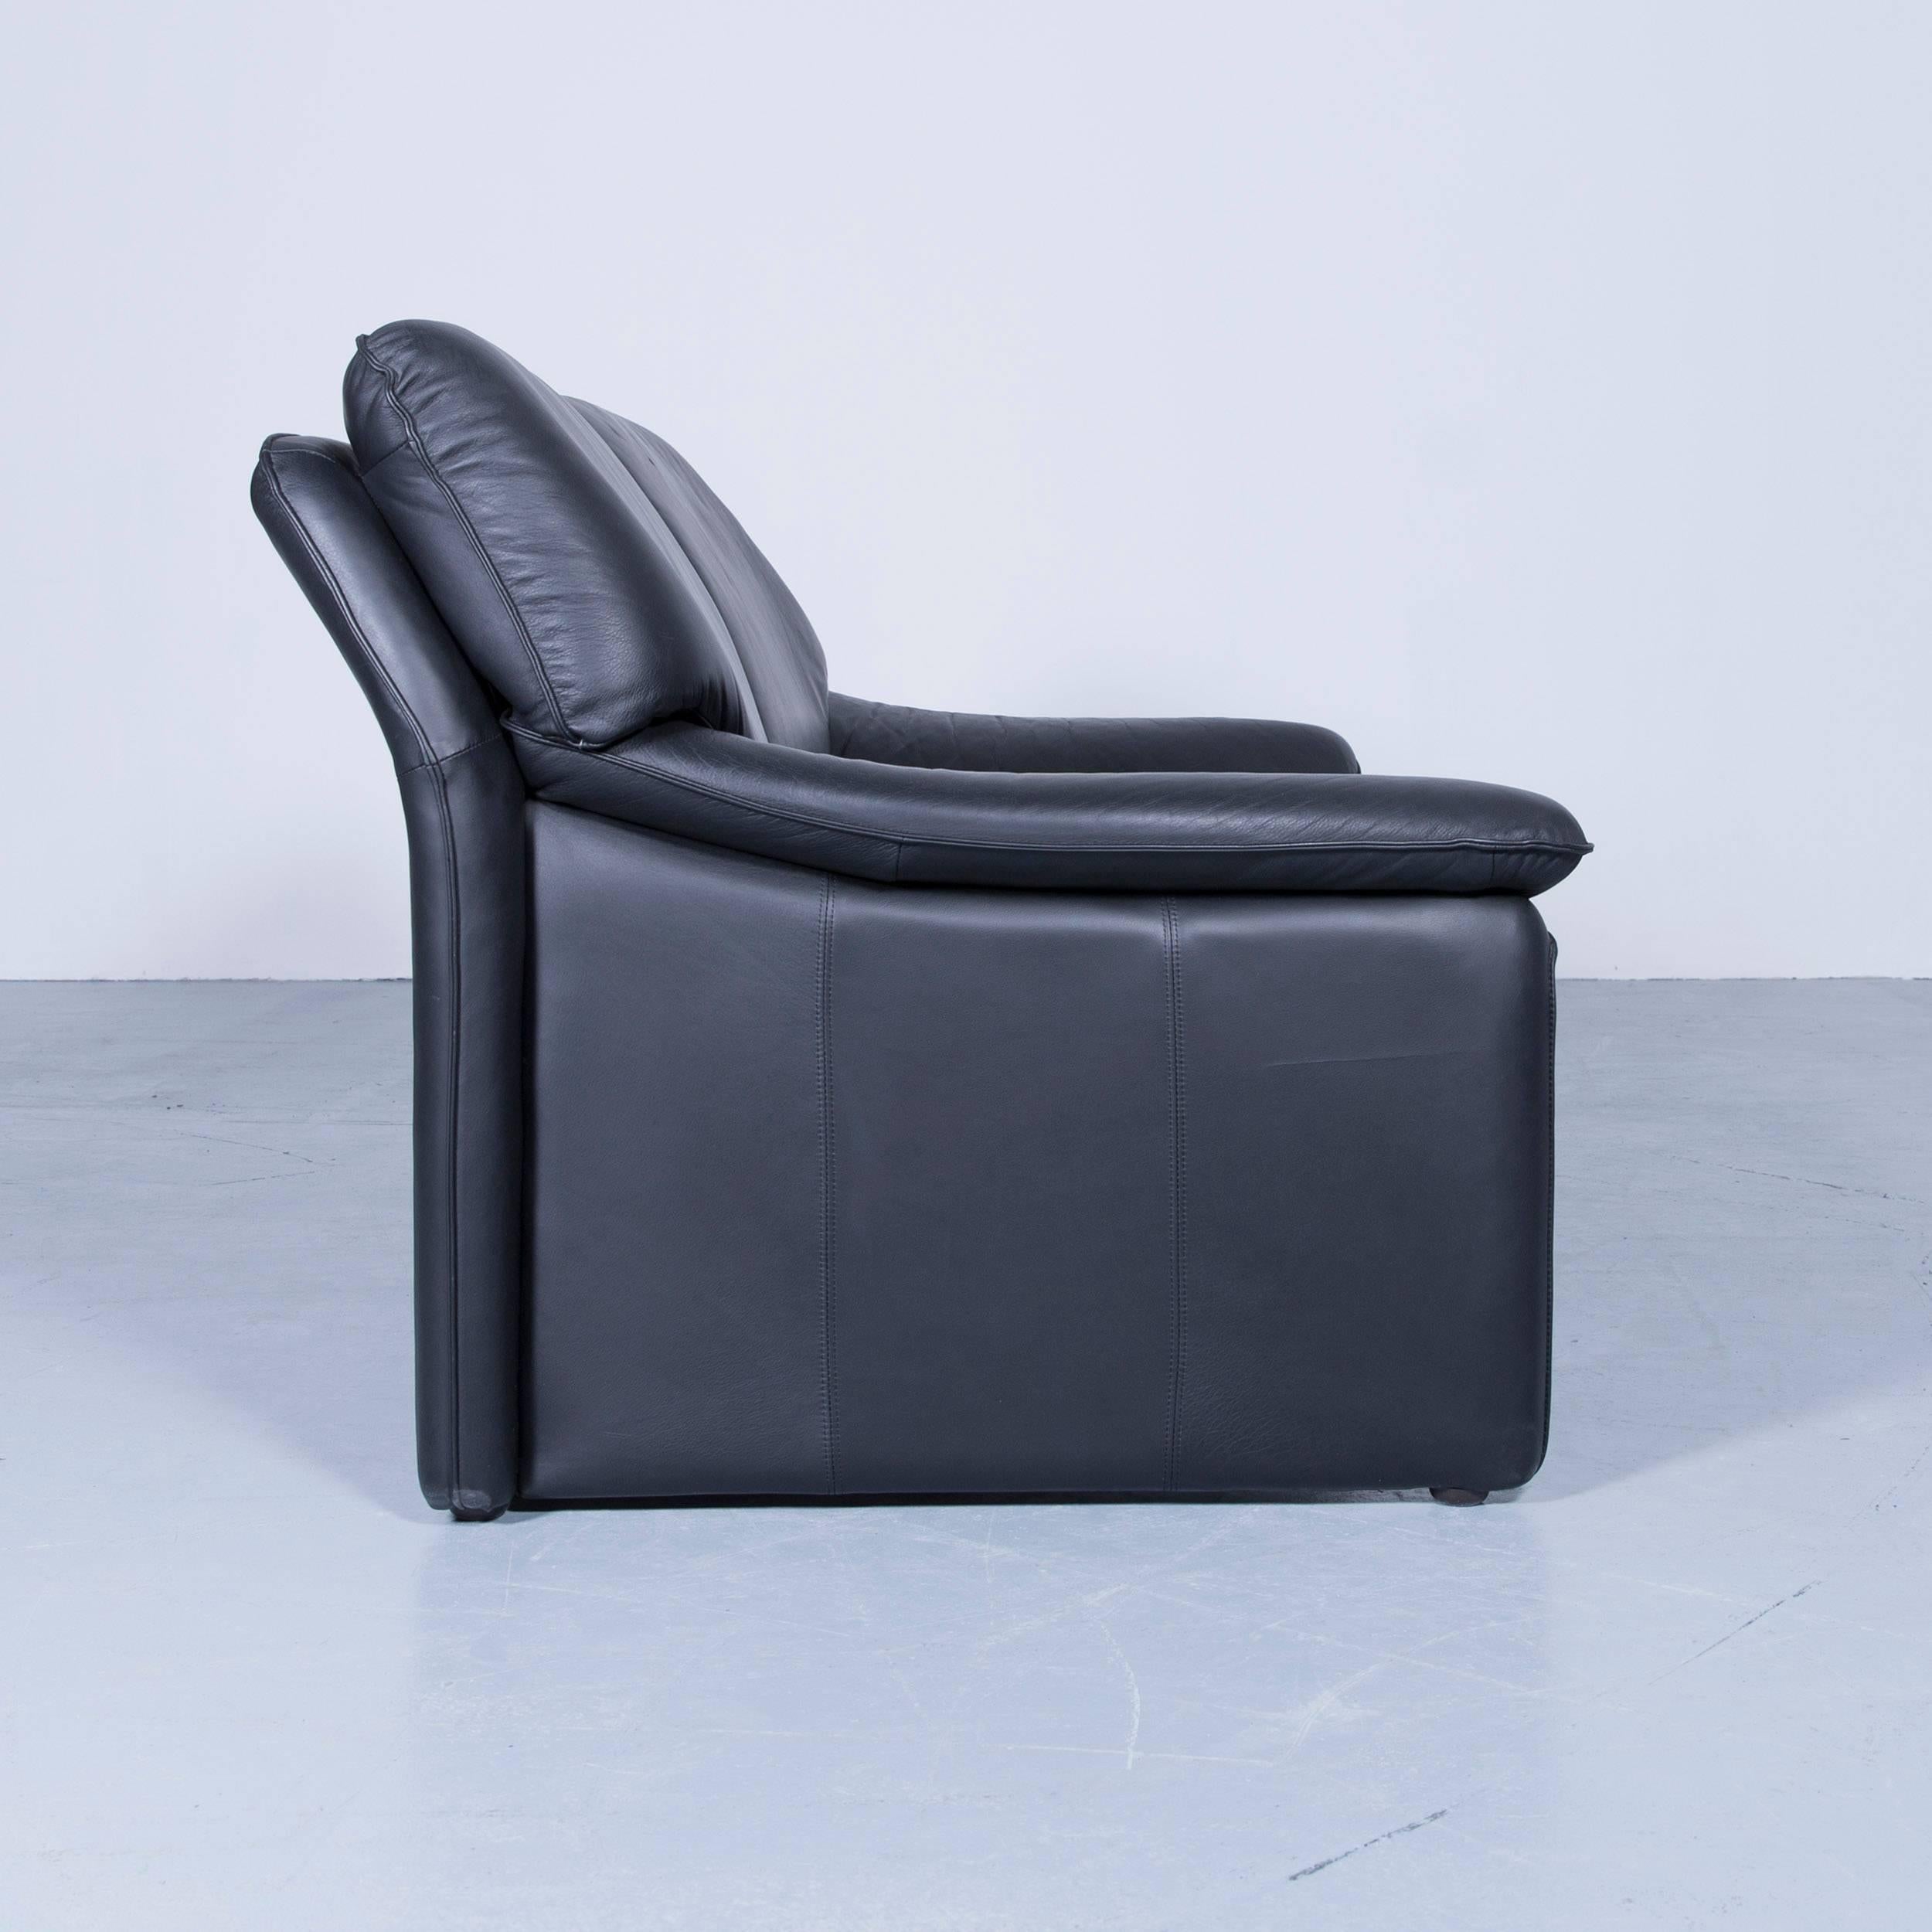 Laauser Atlanta Designer Sofa Leather Black Two-Seat Couch 2